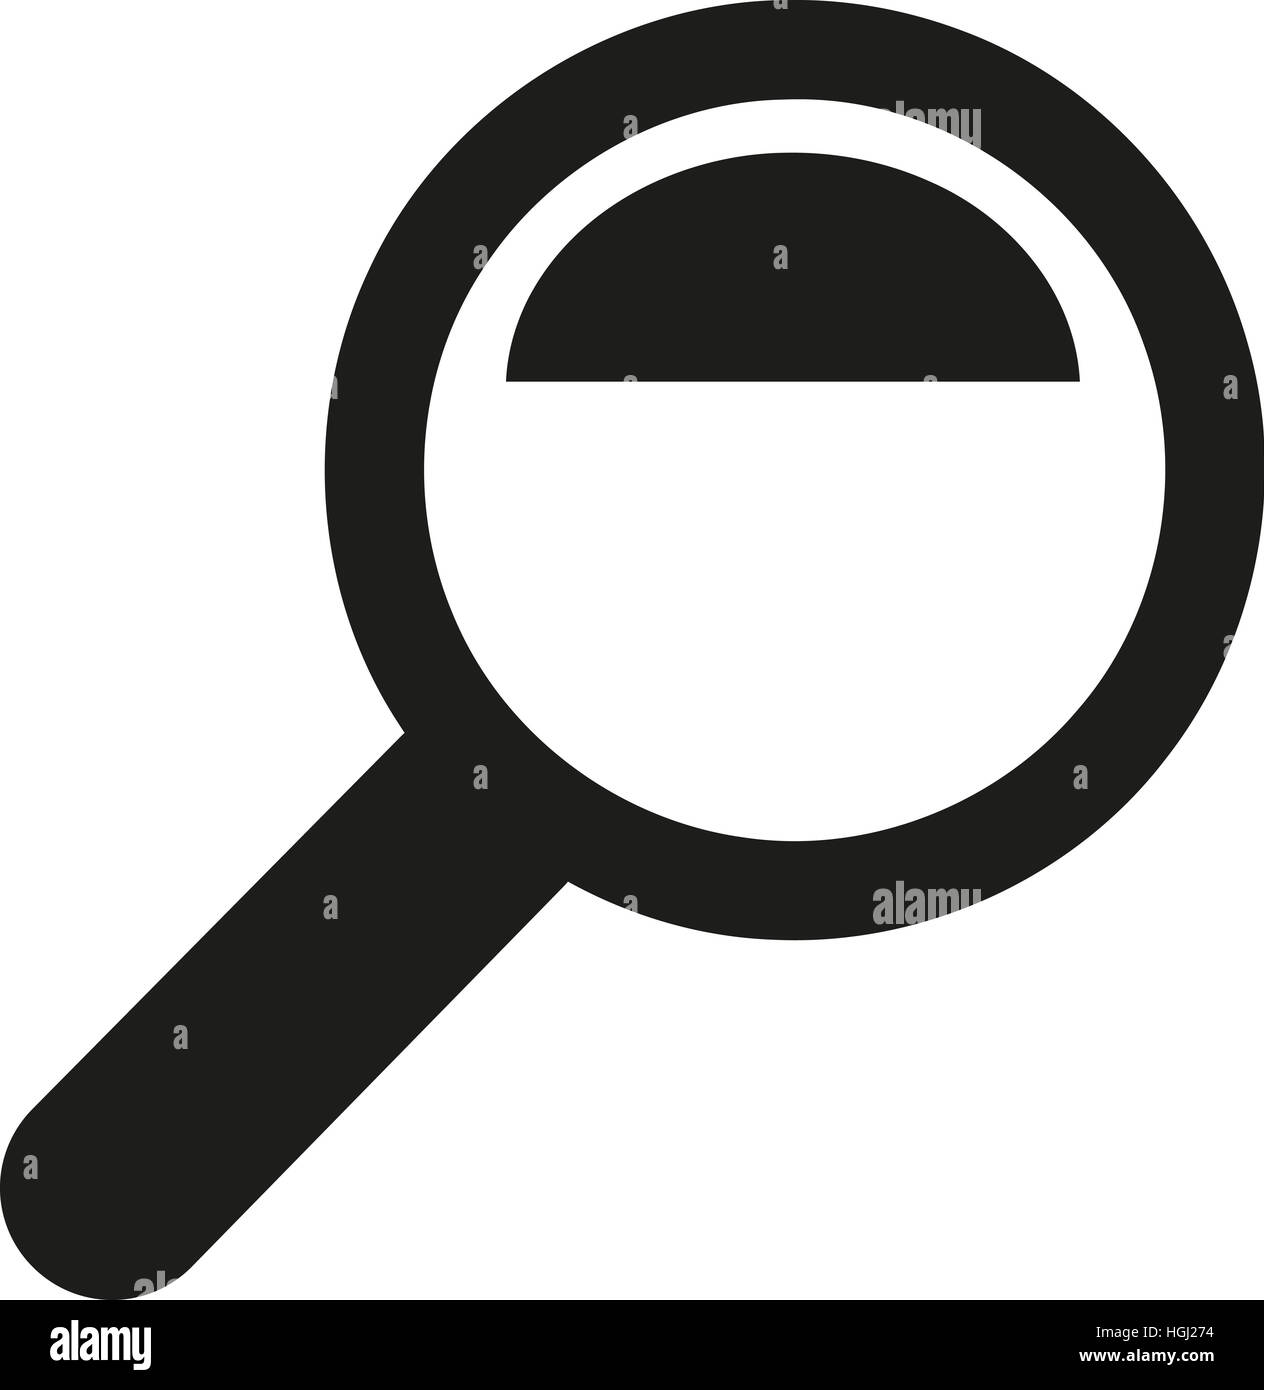 Magnifying glass icon Stock Photo - Alamy